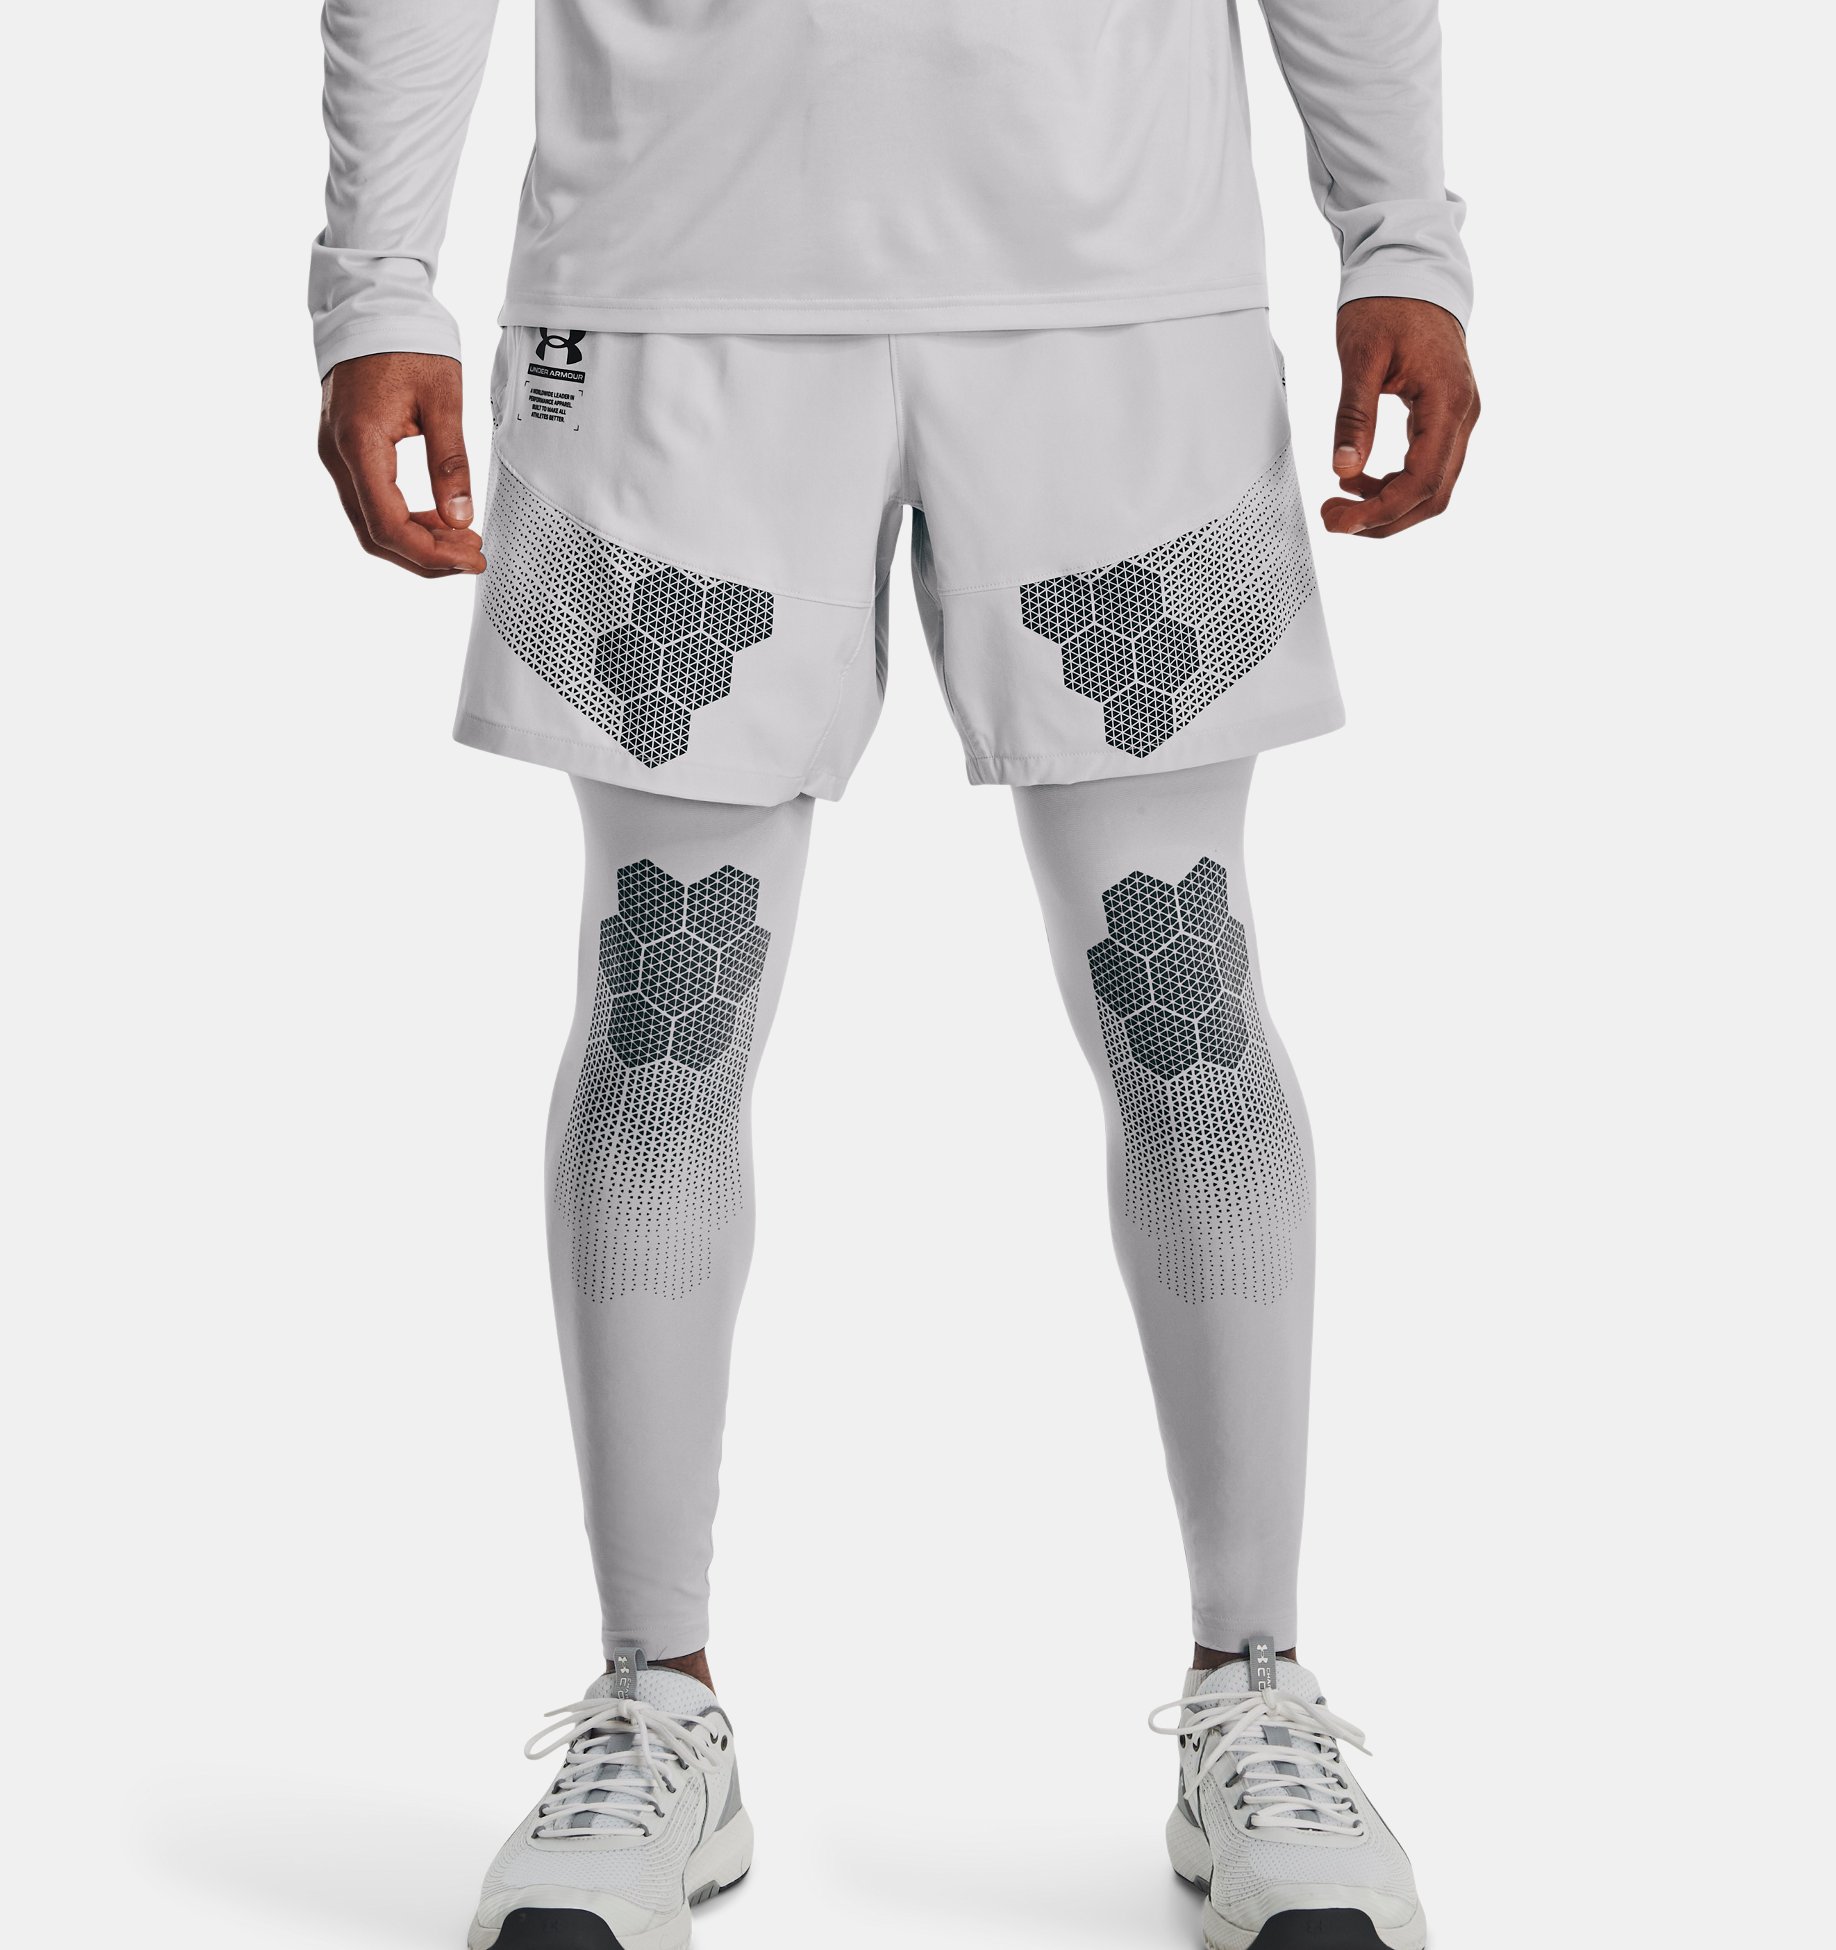 Georgia Bulldog Black Mens Shorts Casual 100% Cotton Breathable Shorts with Elastic Waist Pockets Sweat Shorts 